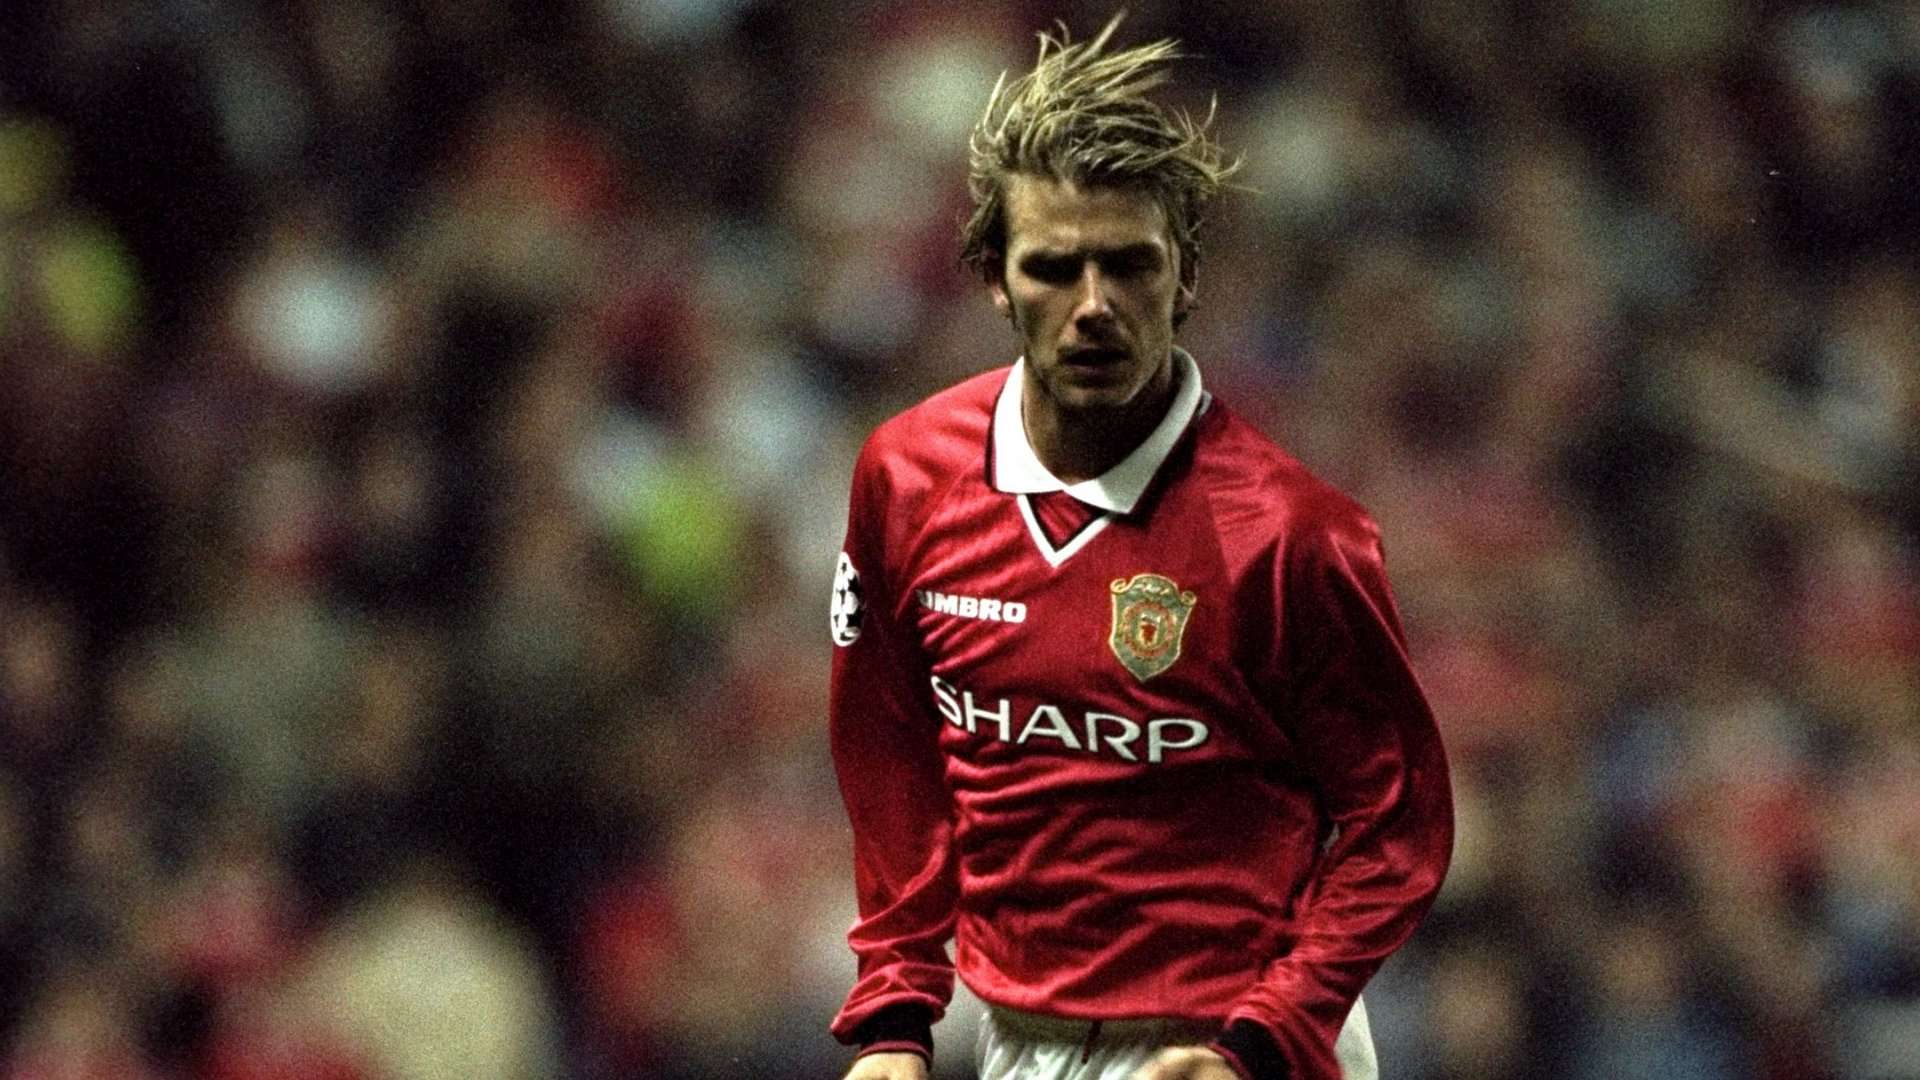 David Beckham Manchester United Wallpapers - Wallpaper Cave